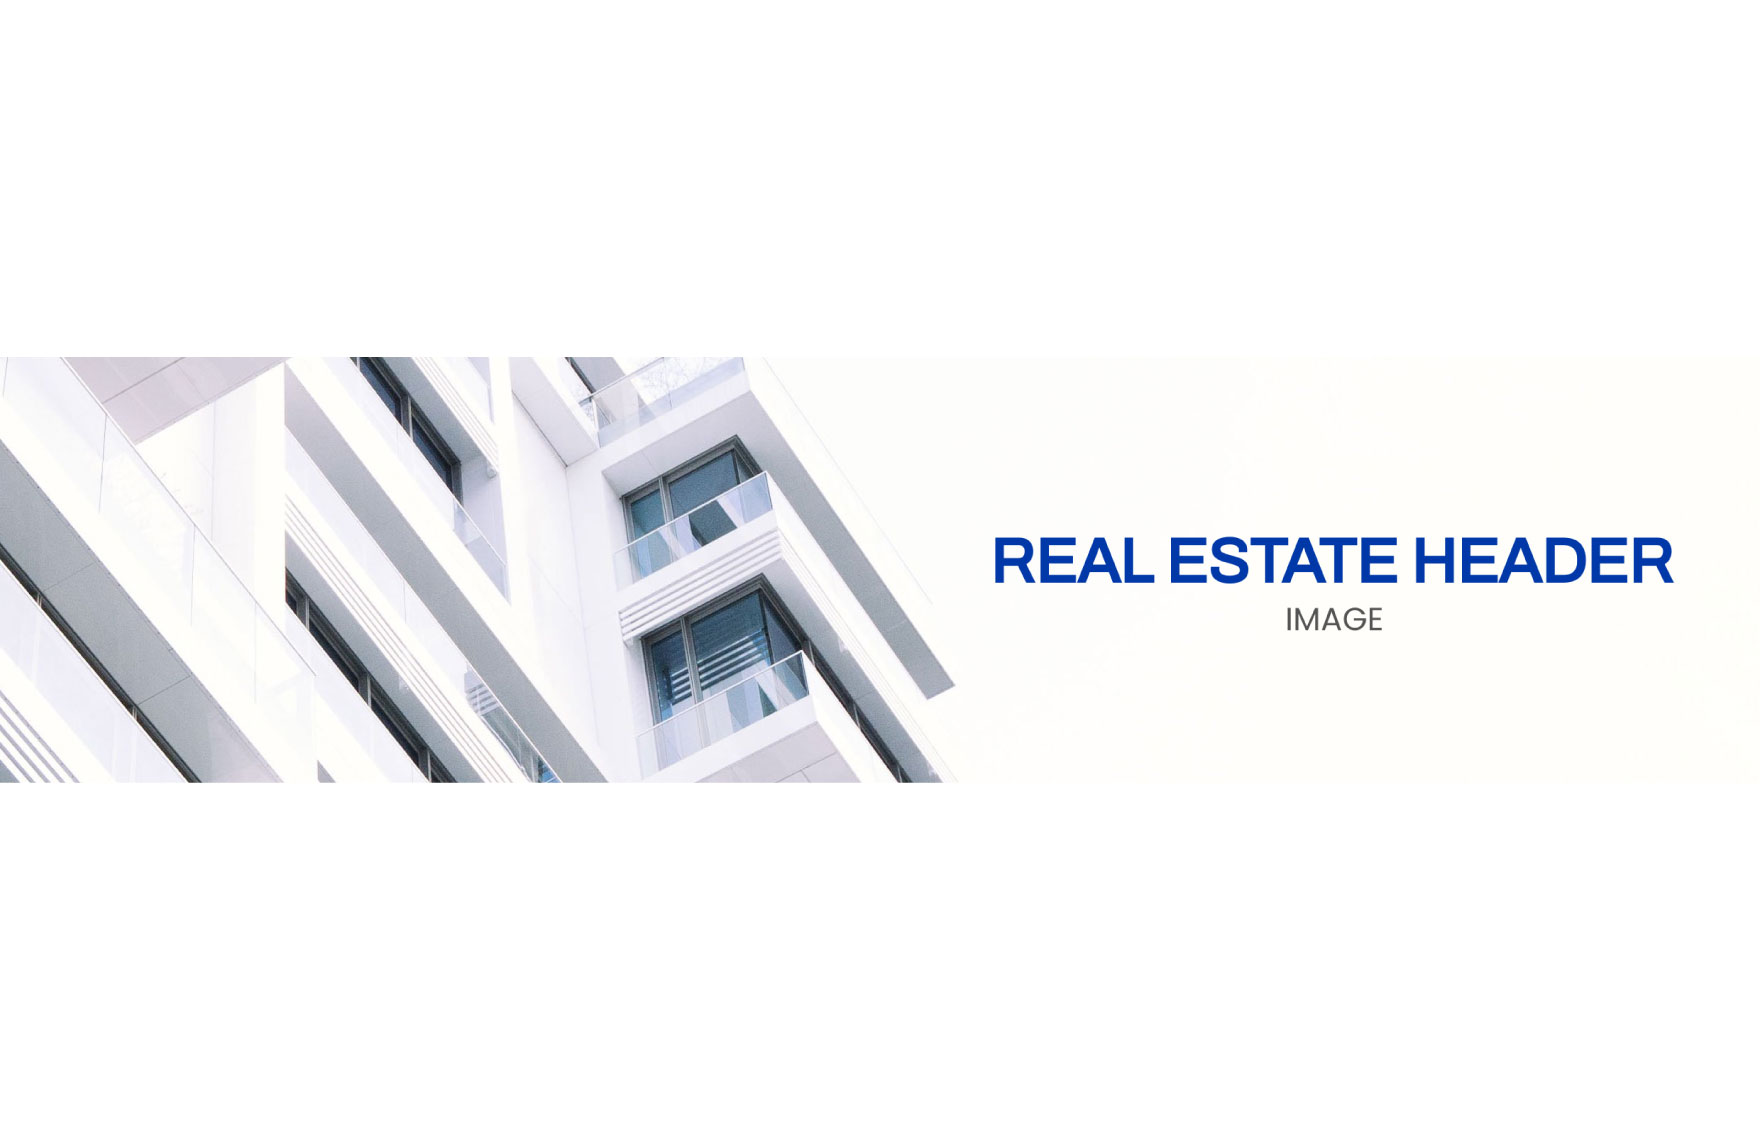 Free Real Estate Header Image  Template